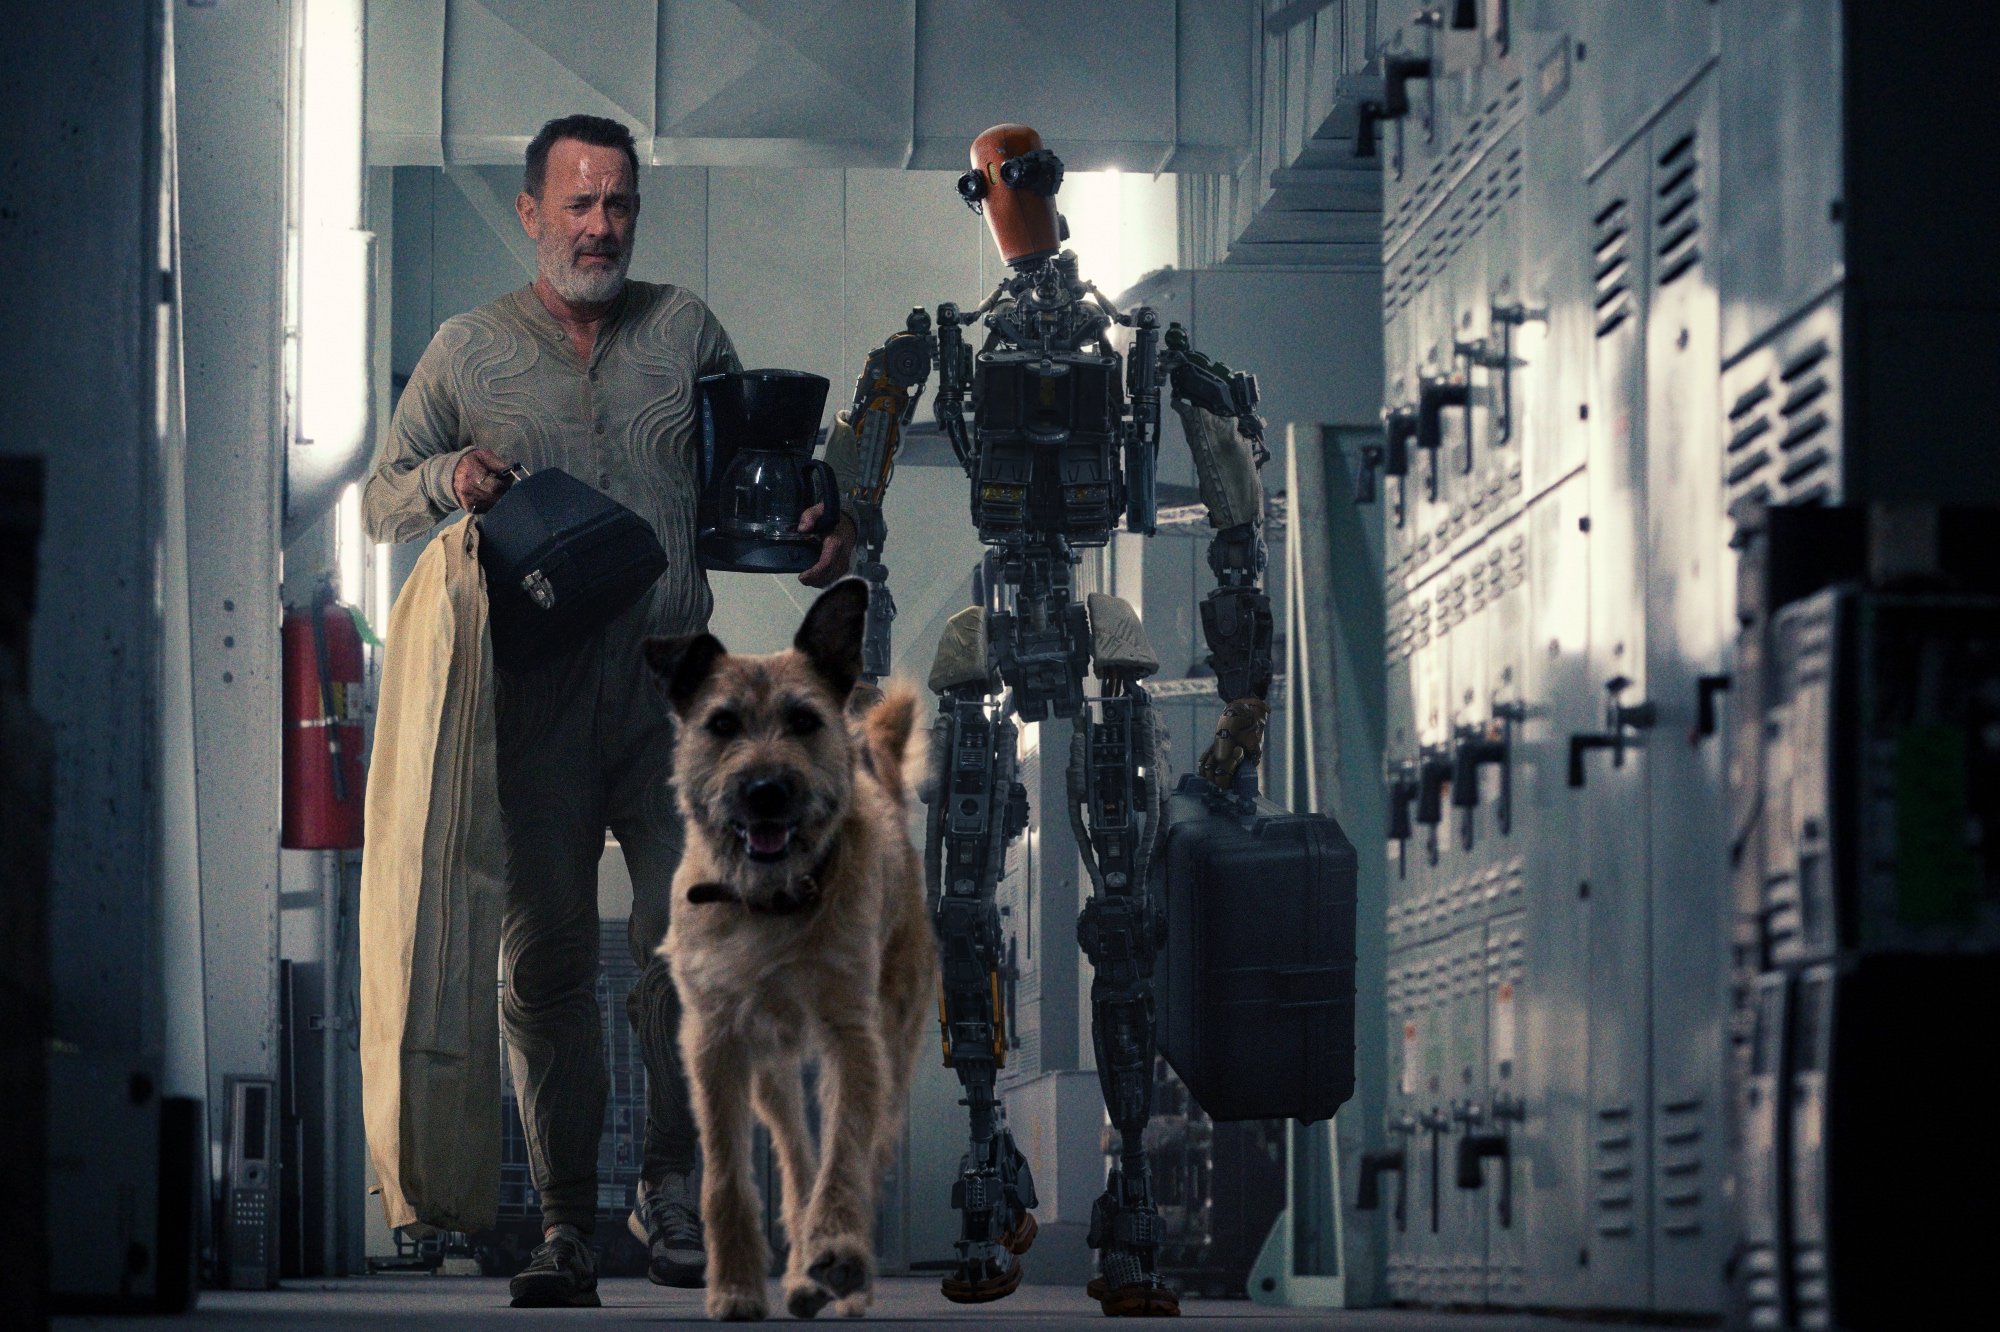 'Finch' actor Tom Hanks, Caleb Landry Jones in motion capture, and dog